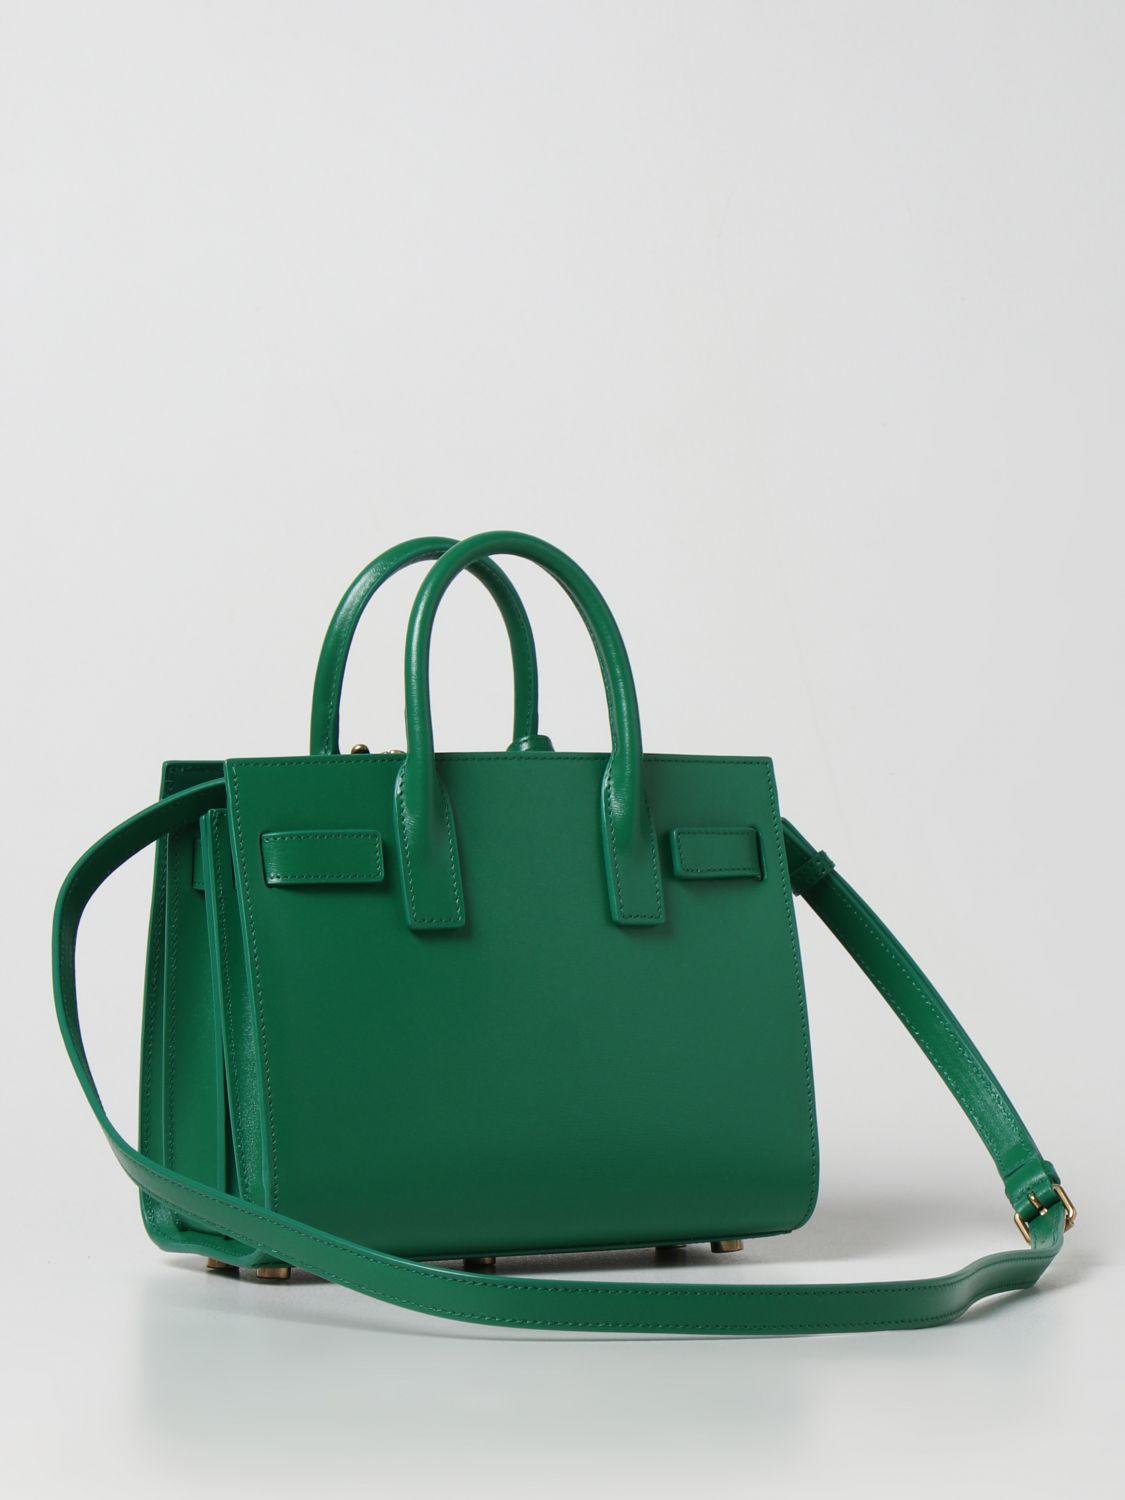 Saint Laurent Sac De Jour Nano Bag In Green Smooth Leather